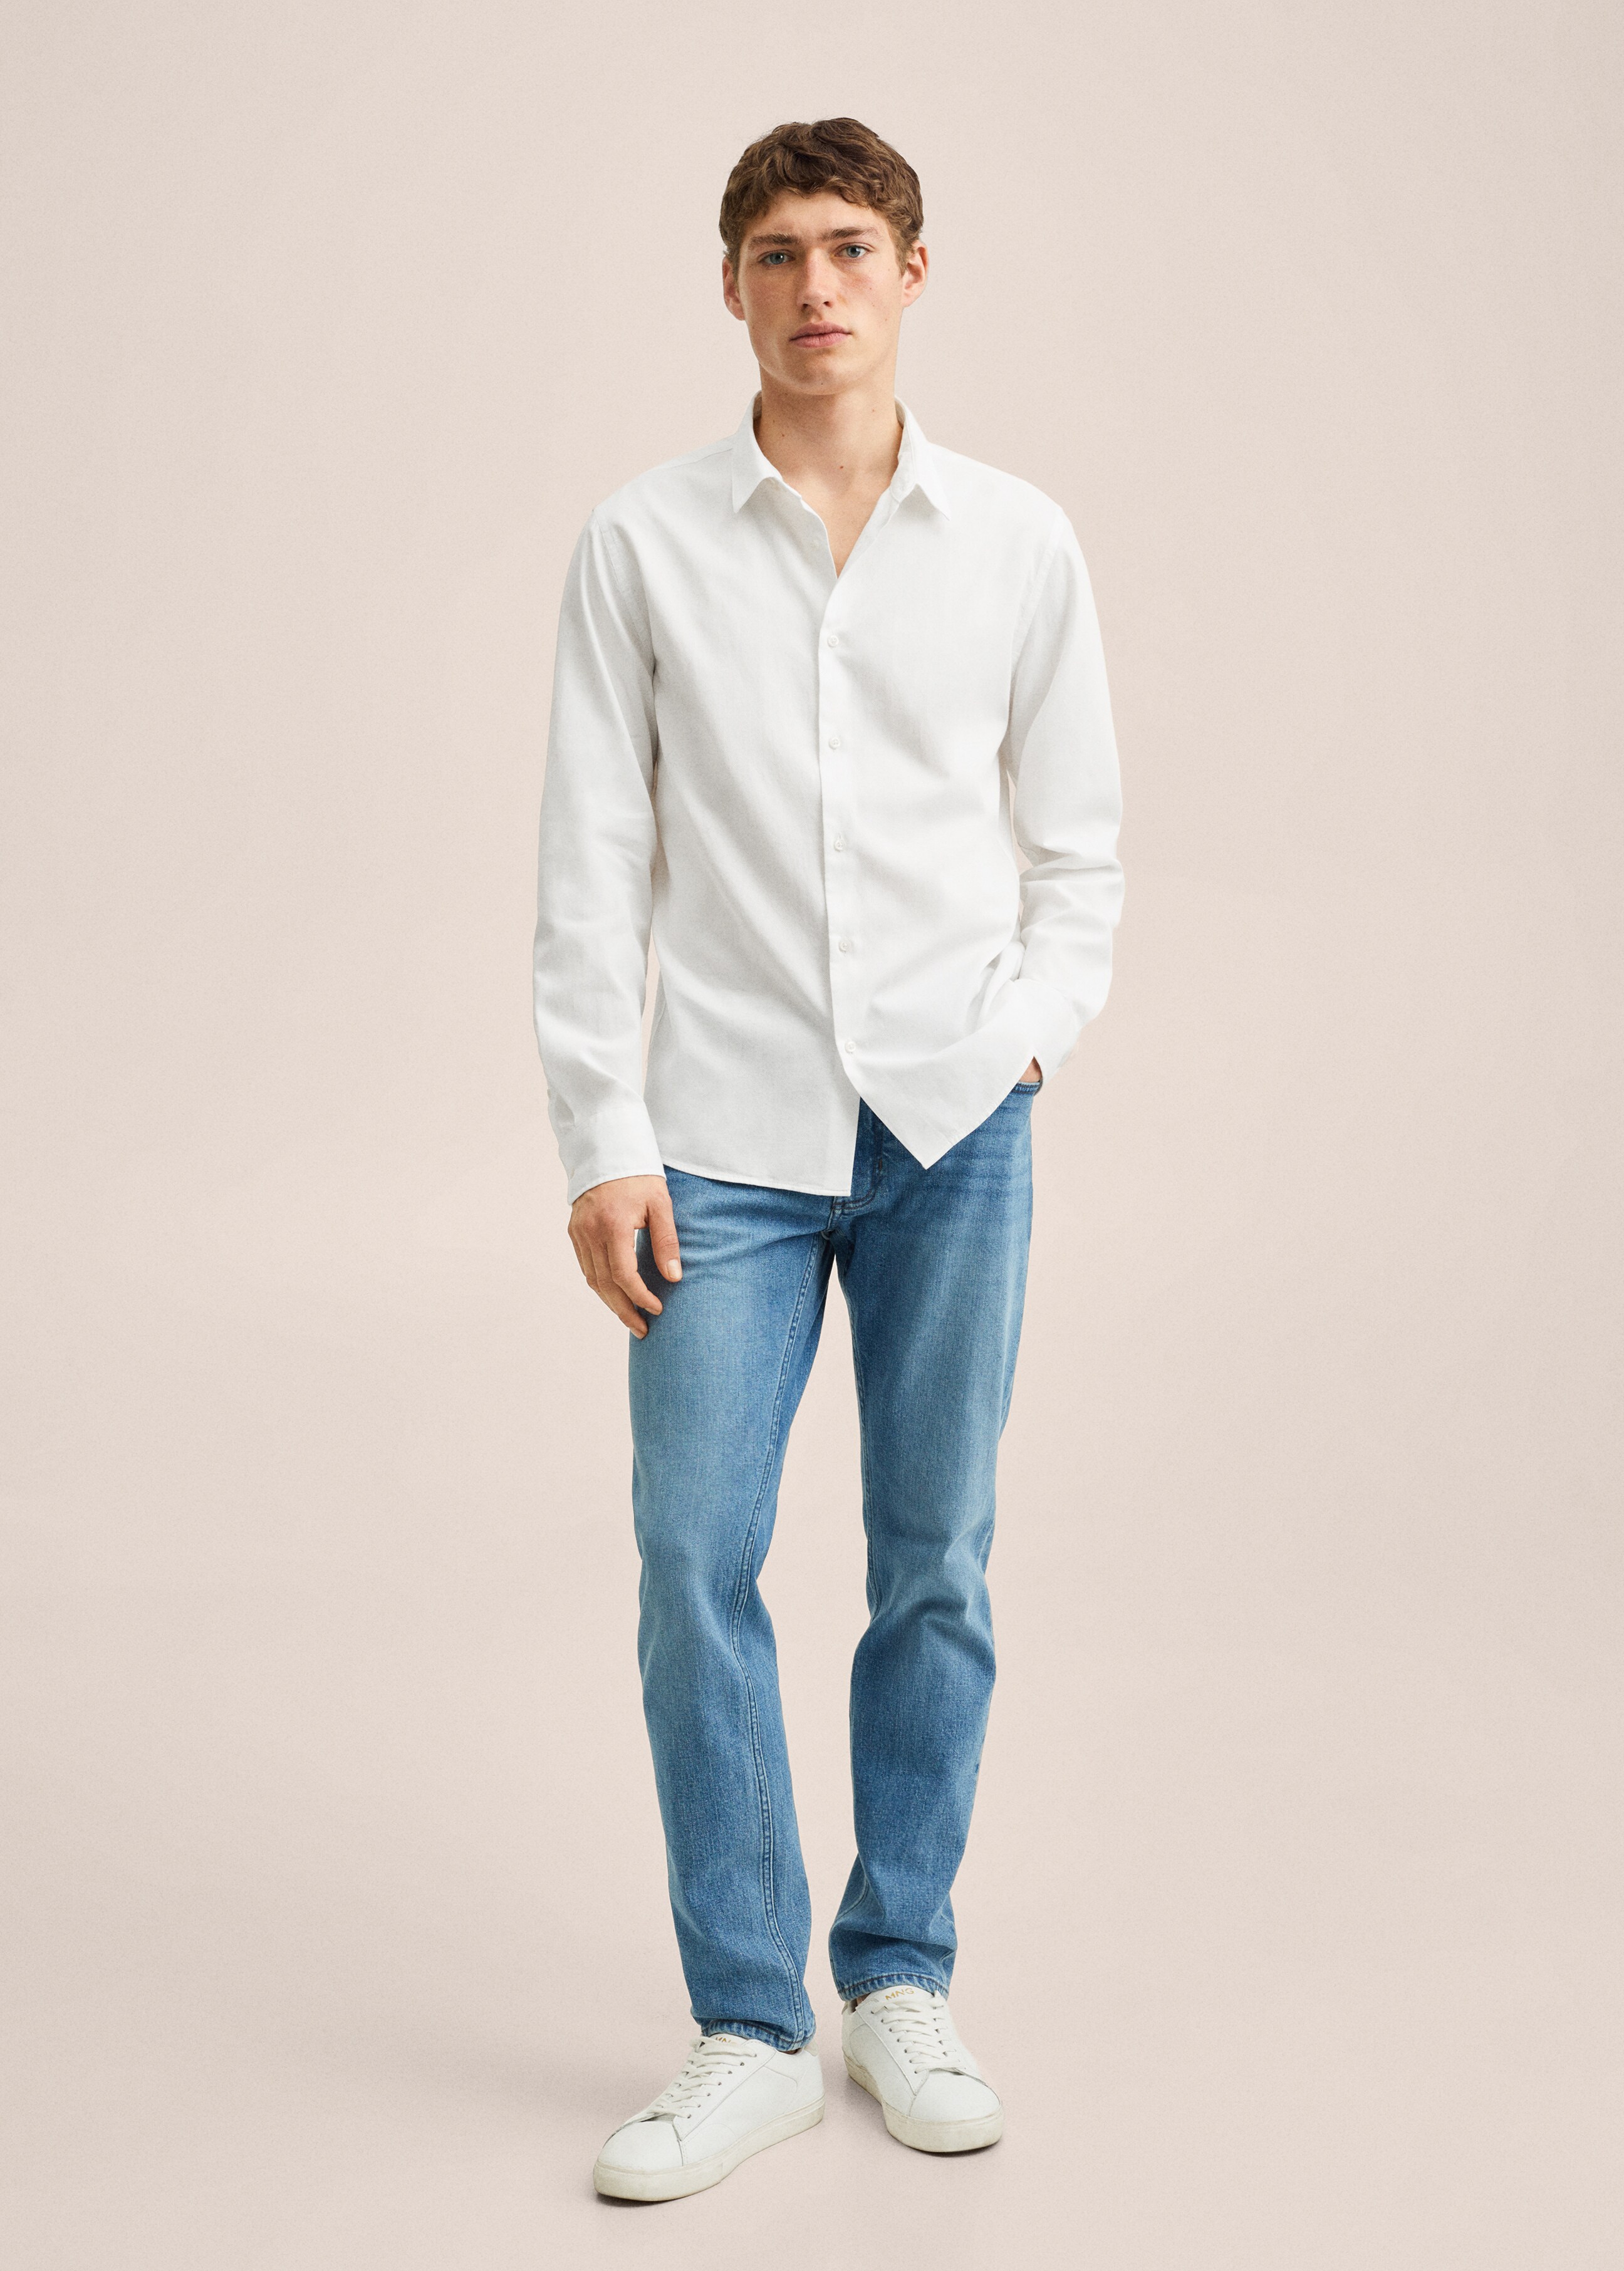 Slim fit structured cotton shirt - General plane